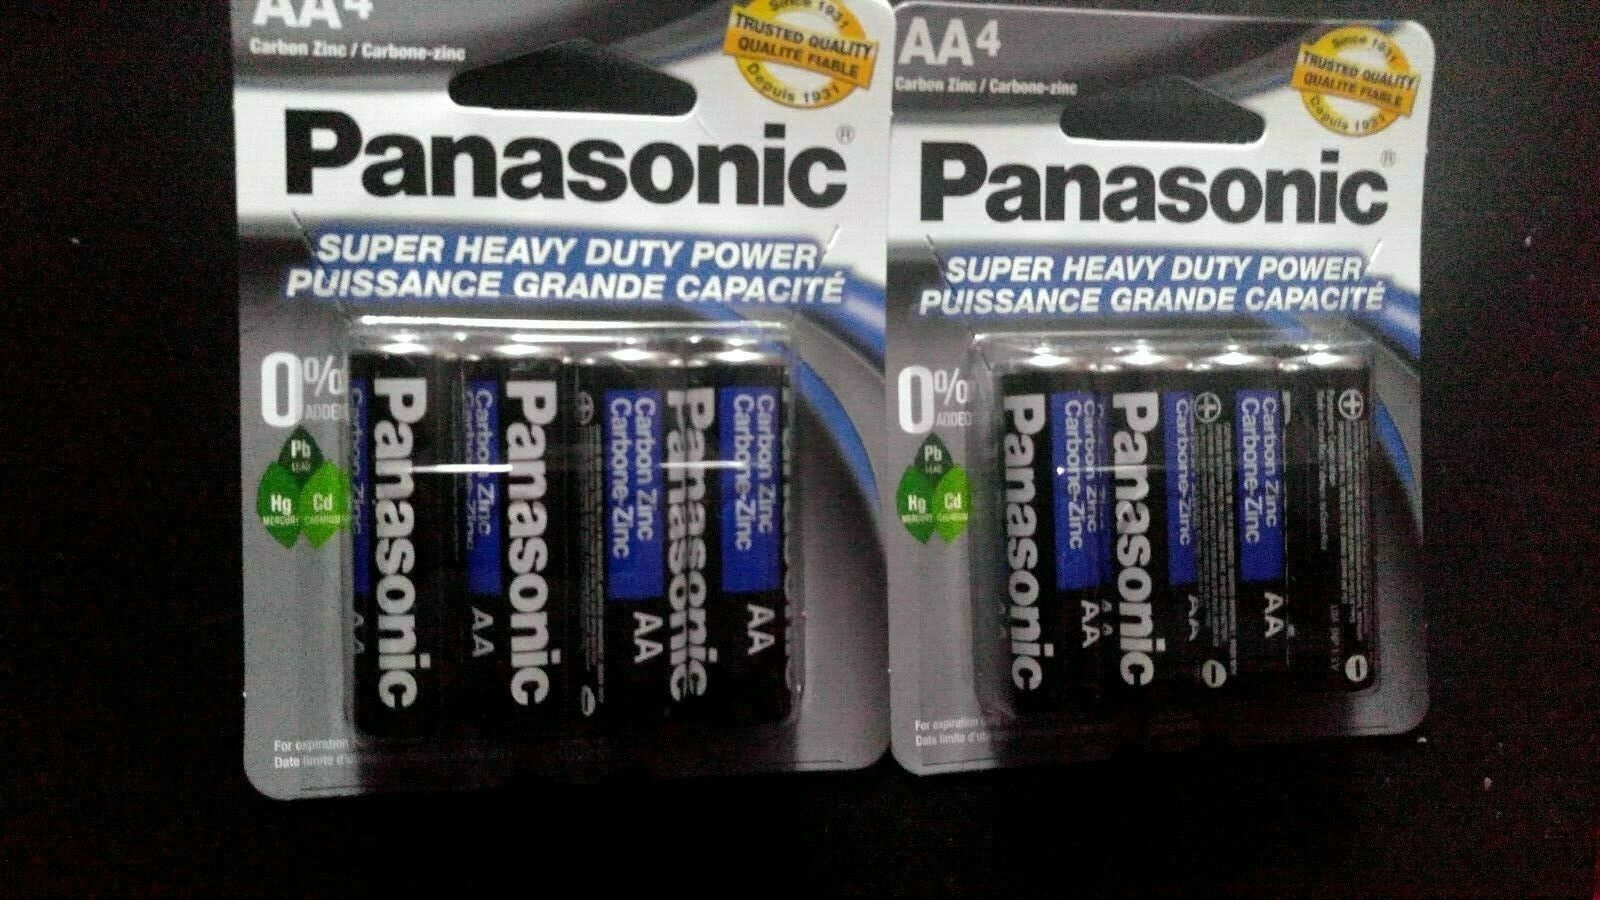 Panasonic Super Heavy Duty AA Batteries - 2 Packs of 4 Batteries each. Count:8